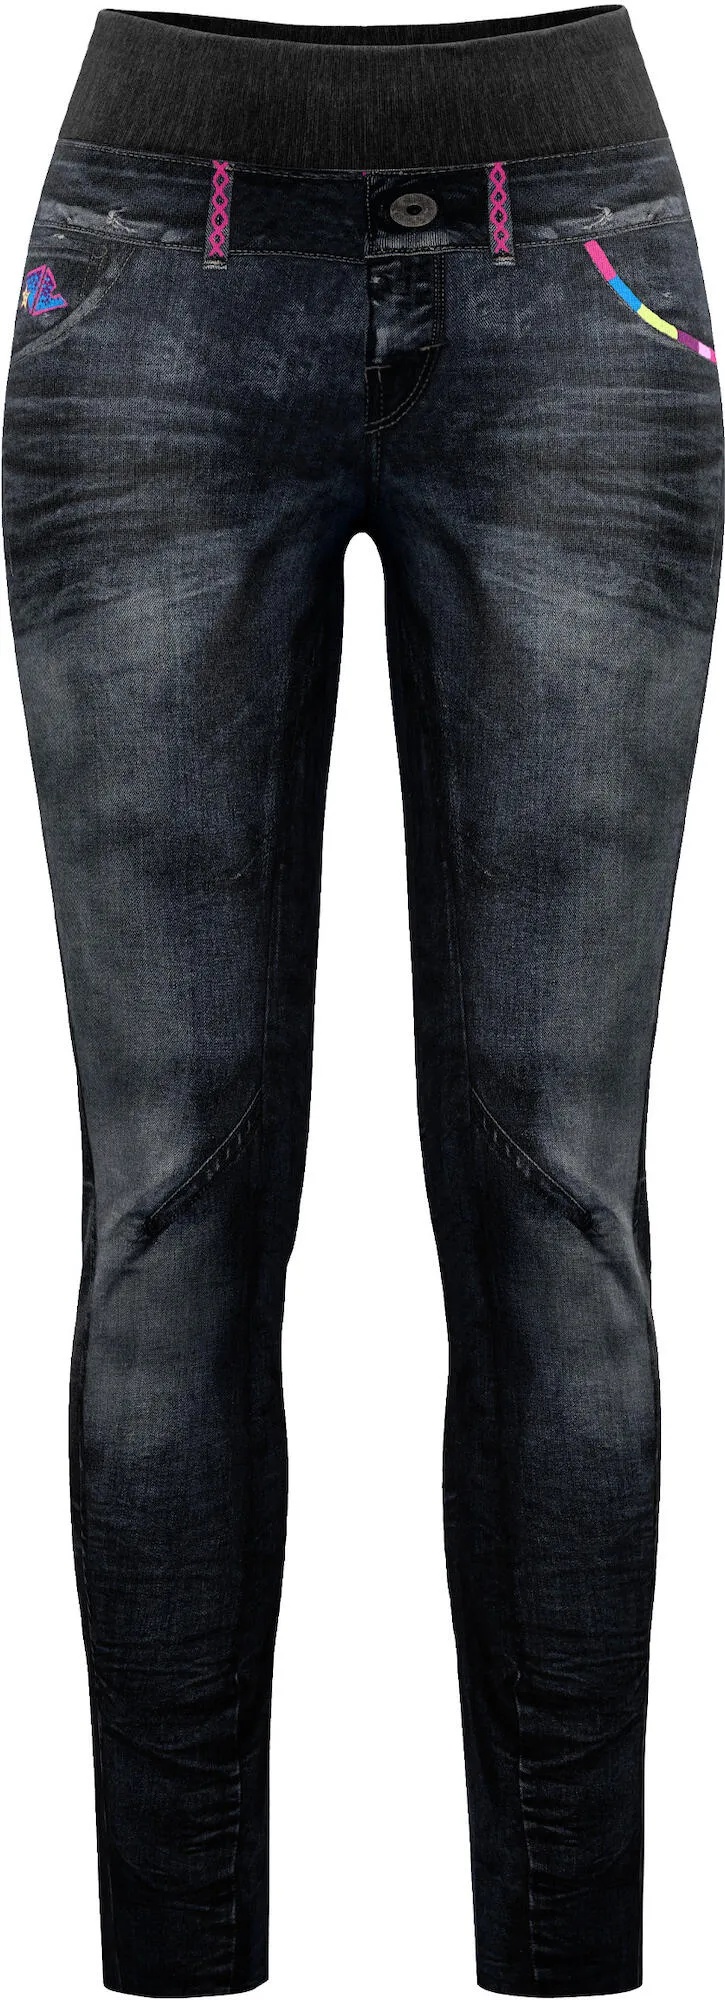 Crazy Pant Wonder Magic Light print dark jeans (X016) L